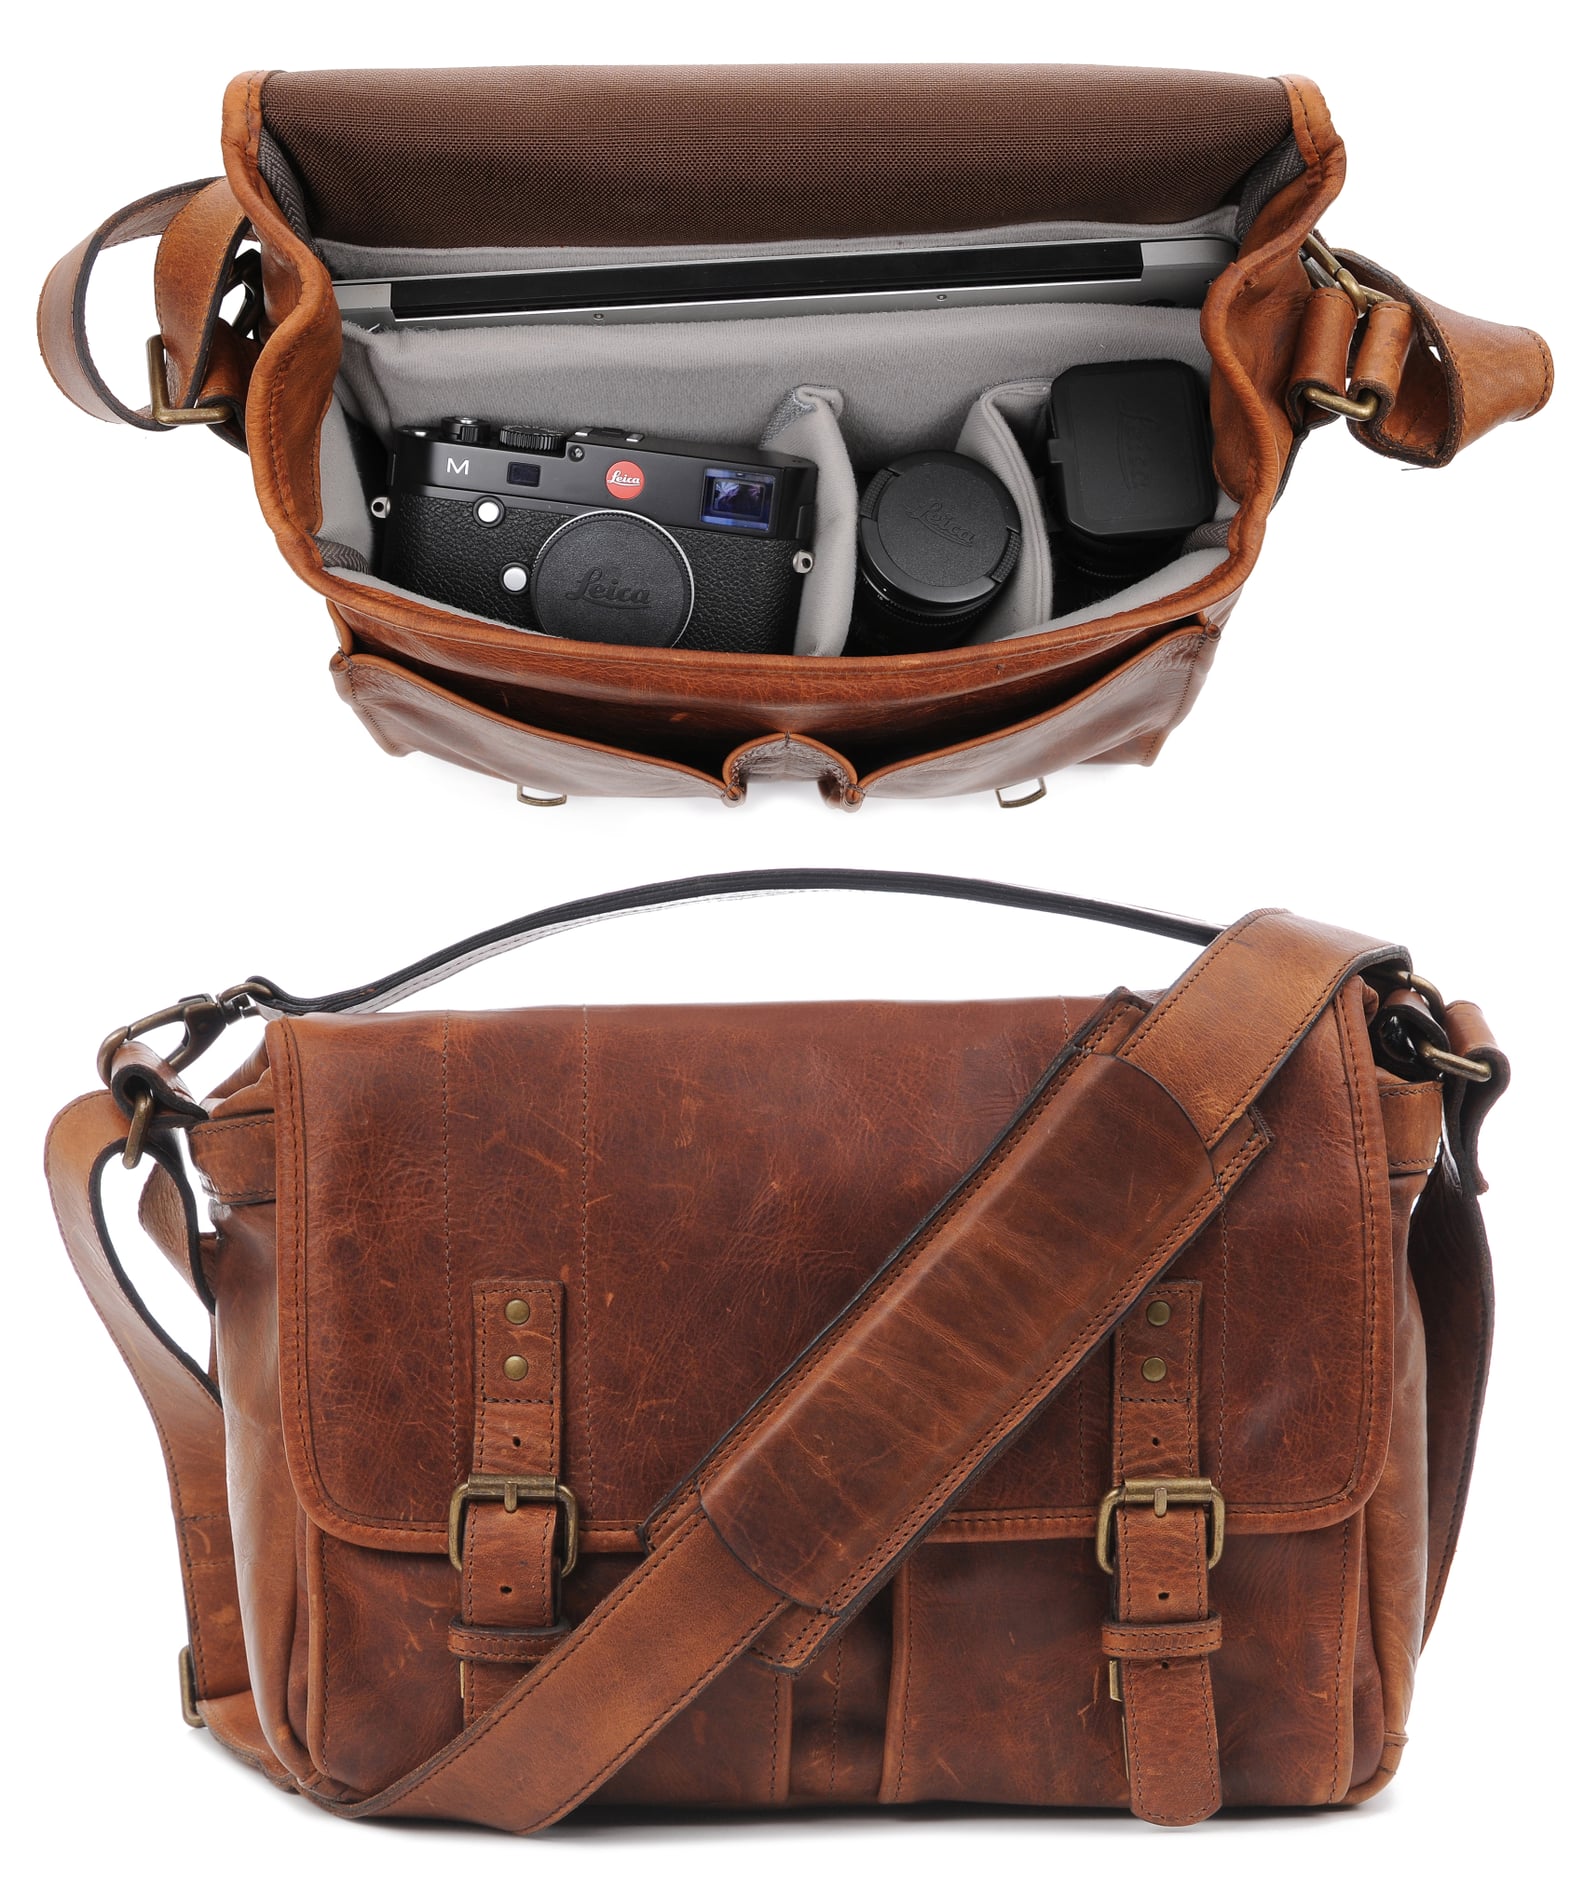 Best Camera Bag 2014 | POPSUGAR Tech